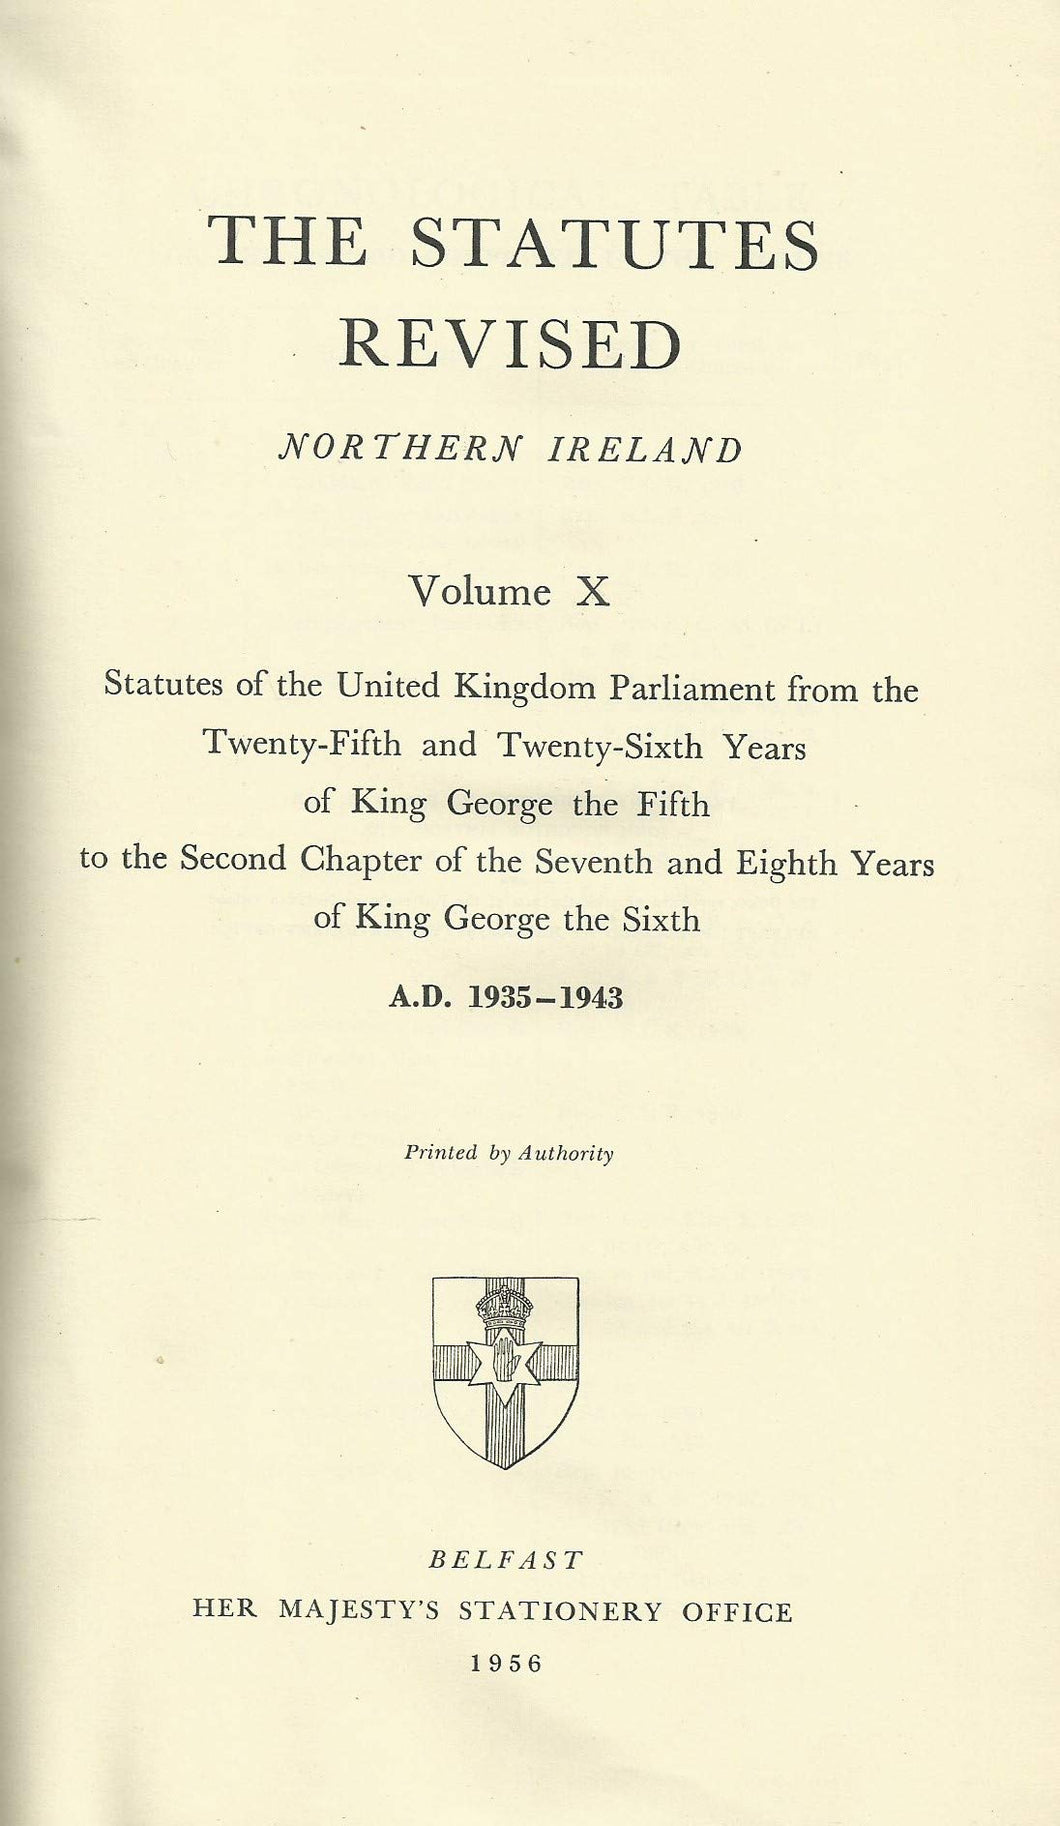 The Statutes Revised - Northern Ireland, 1935-1943 - Volume X